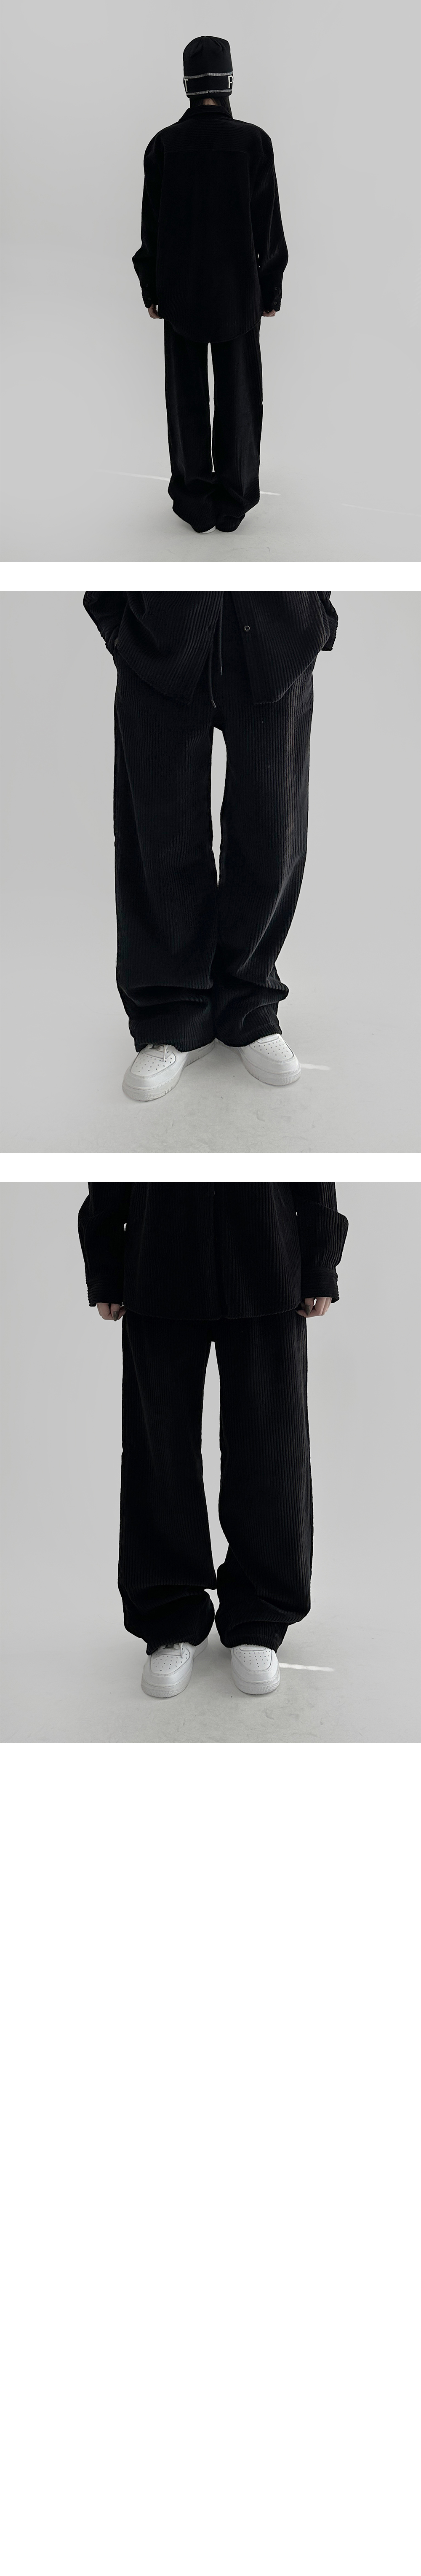 suspenders skirt/pants charcoal color image-S1L7